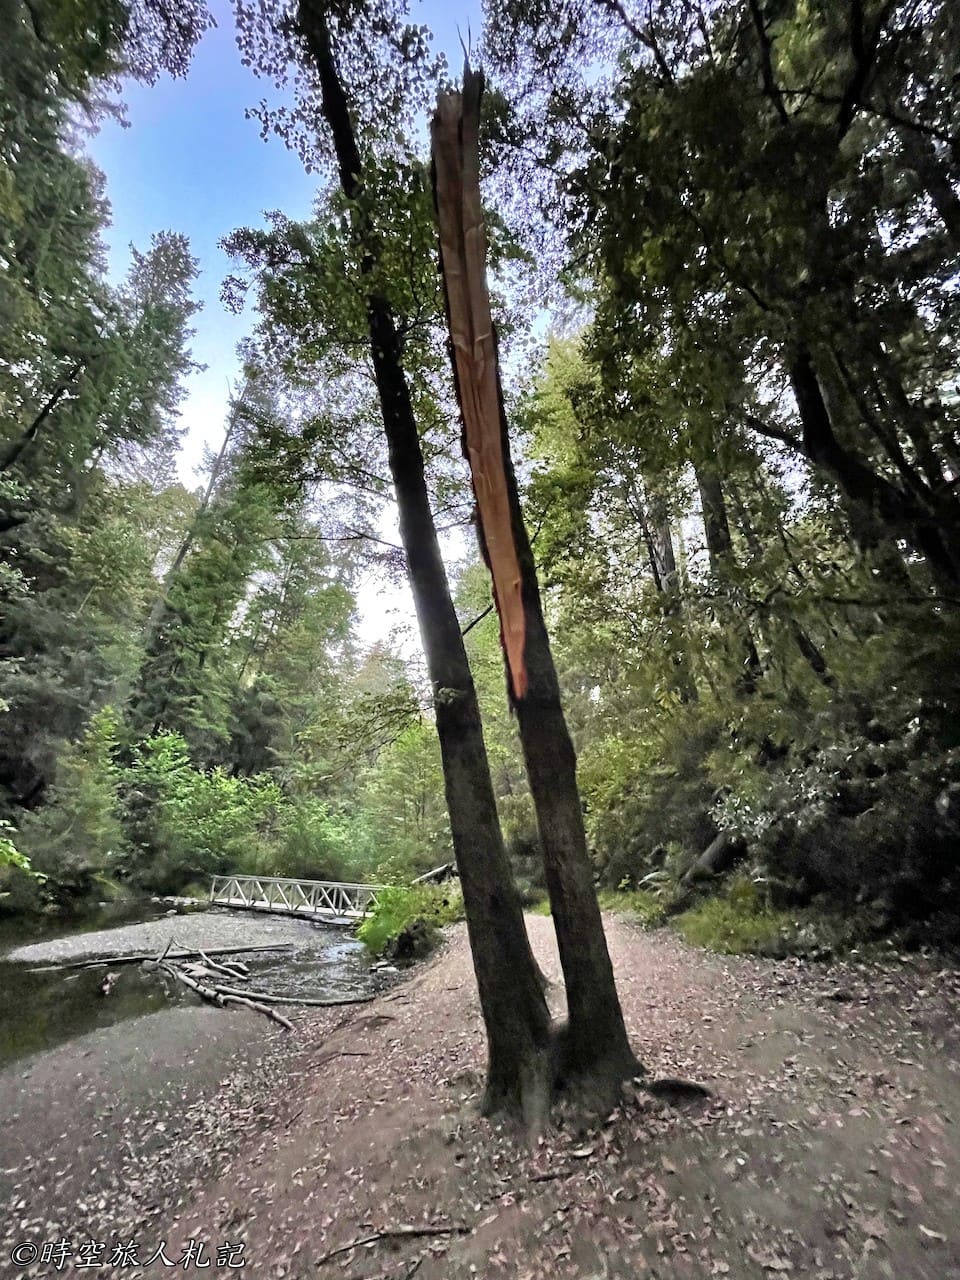 Portola redwood state park,Portola redwood camping,Tiptoe falls 23